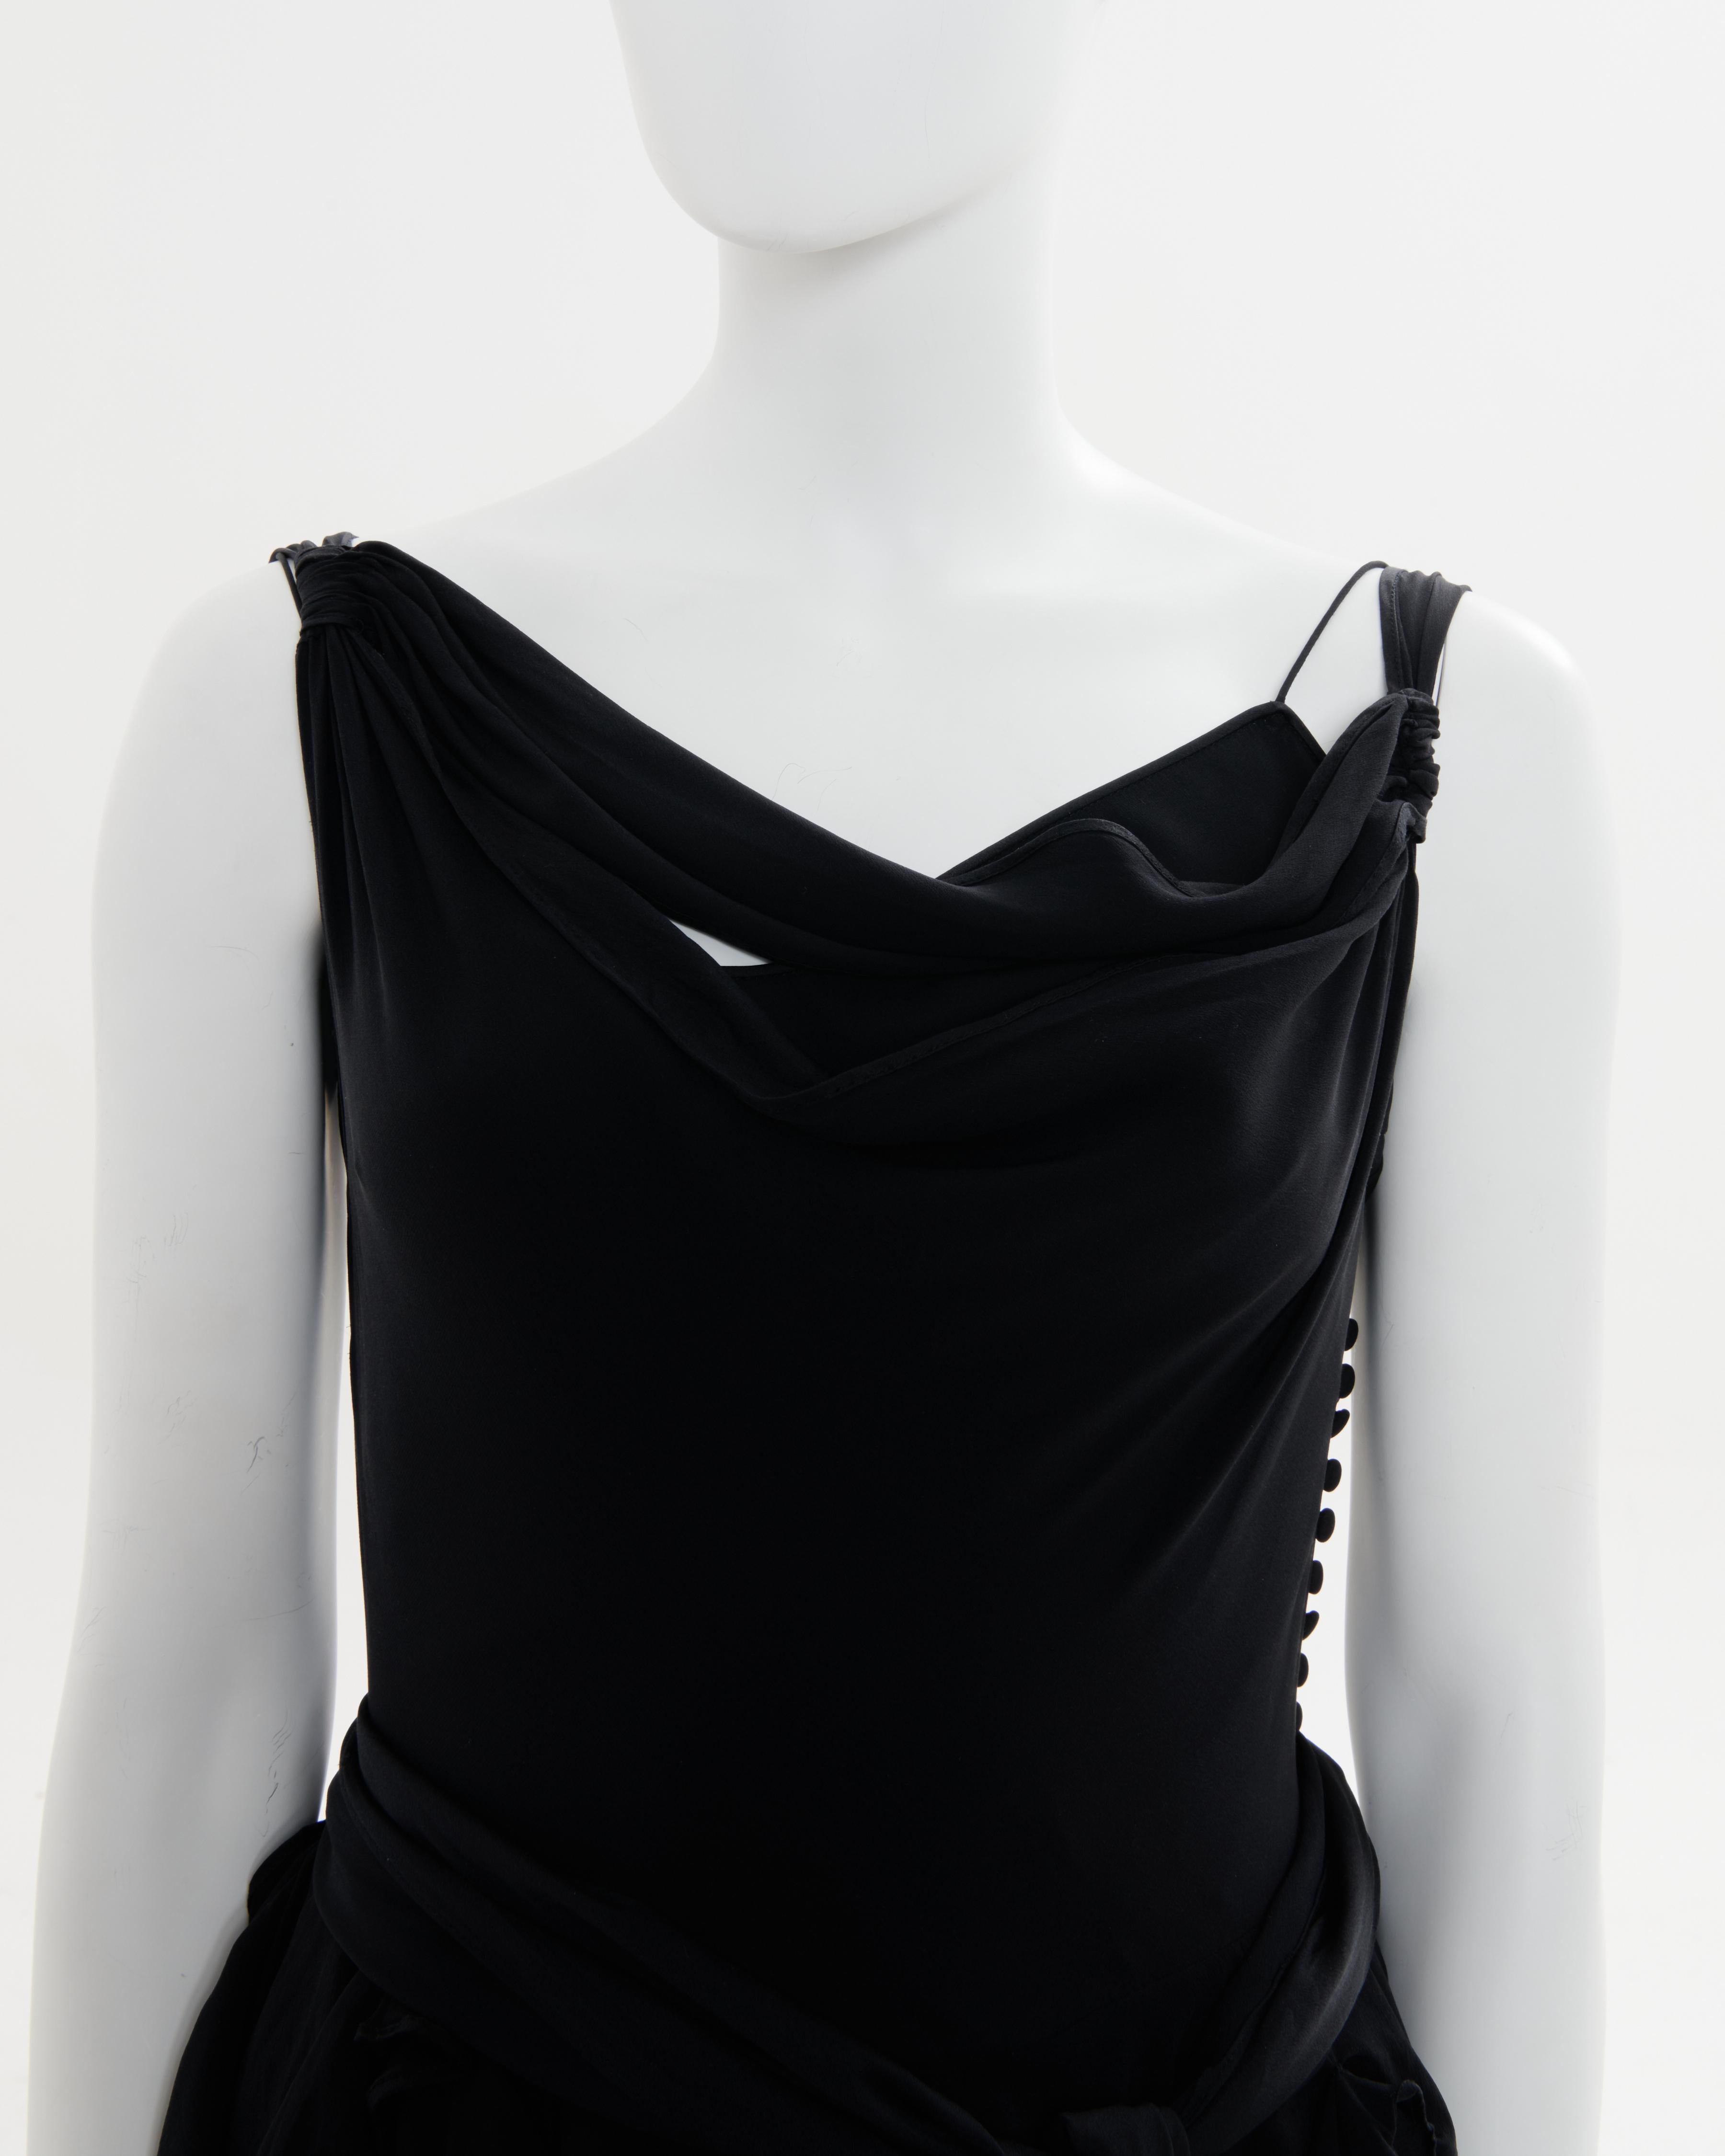 Christian Dior by John Galliano F/W 2006 Black silk bias-cut evening dress 2